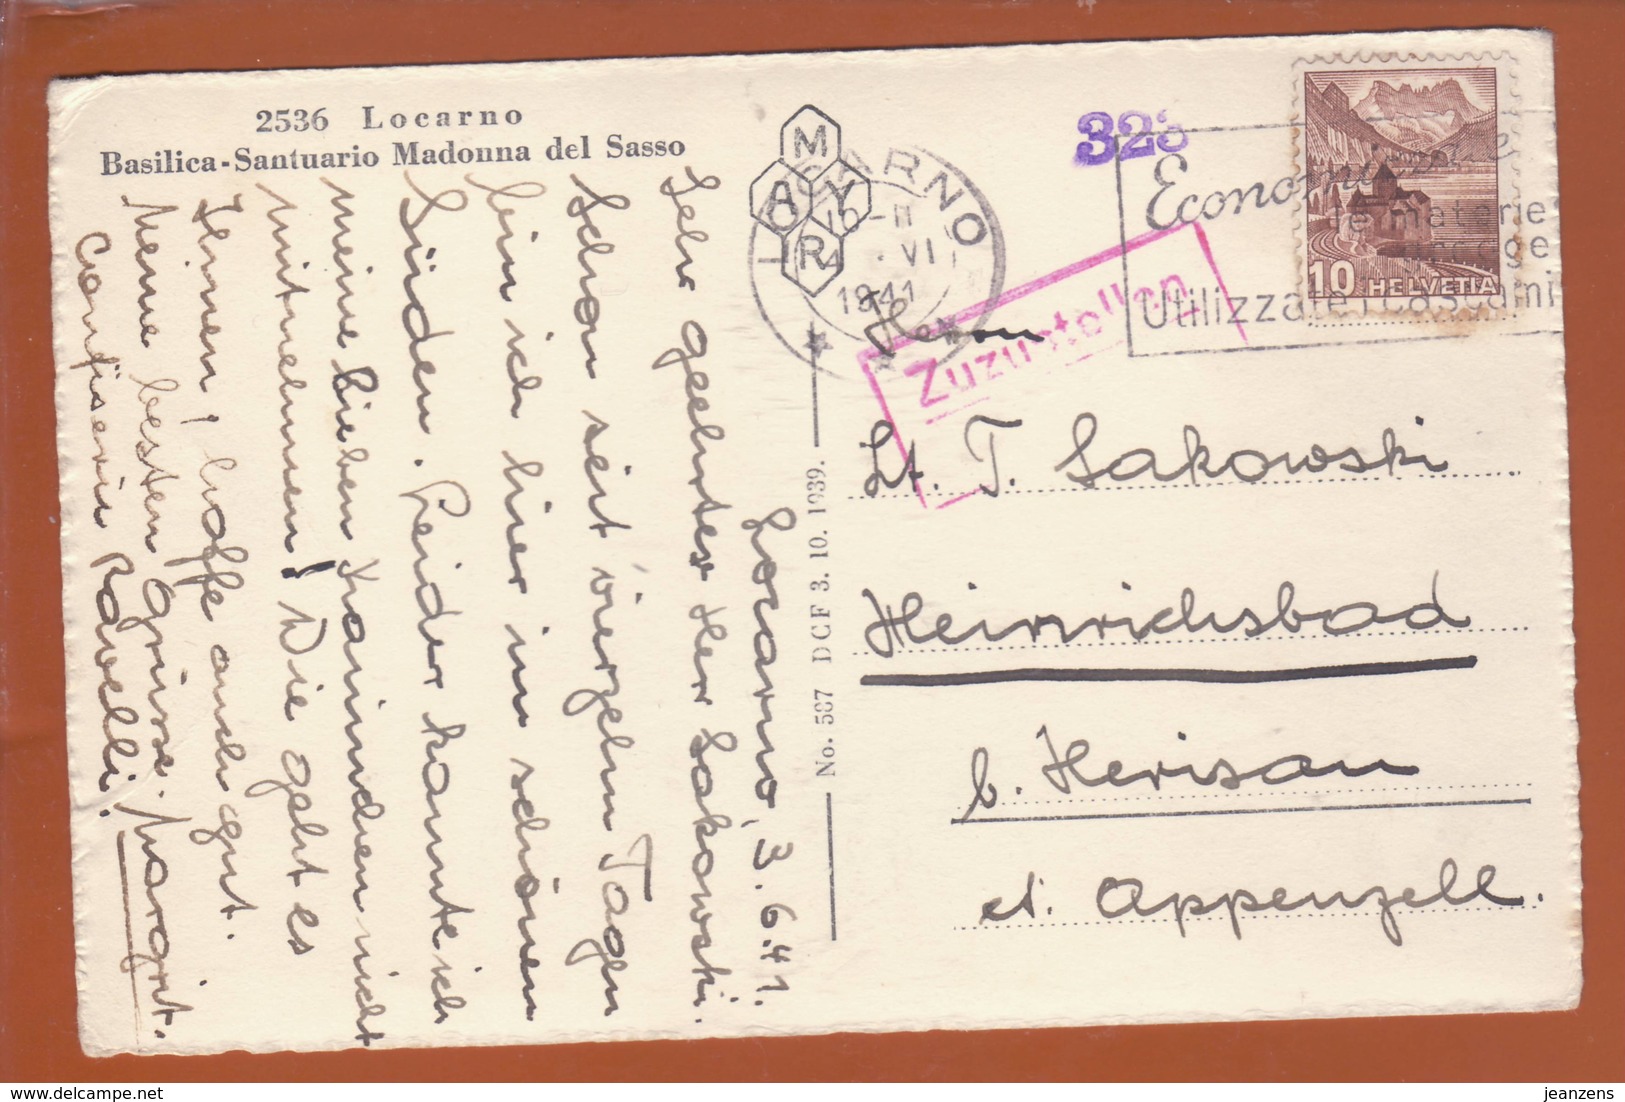 Carte à Vue "Locarno" Obl. Locarno 04.06.1941 -> Camp Heinrichsbad - Zensur/Censored/censure Internement 323 + DCF - Lettres & Documents